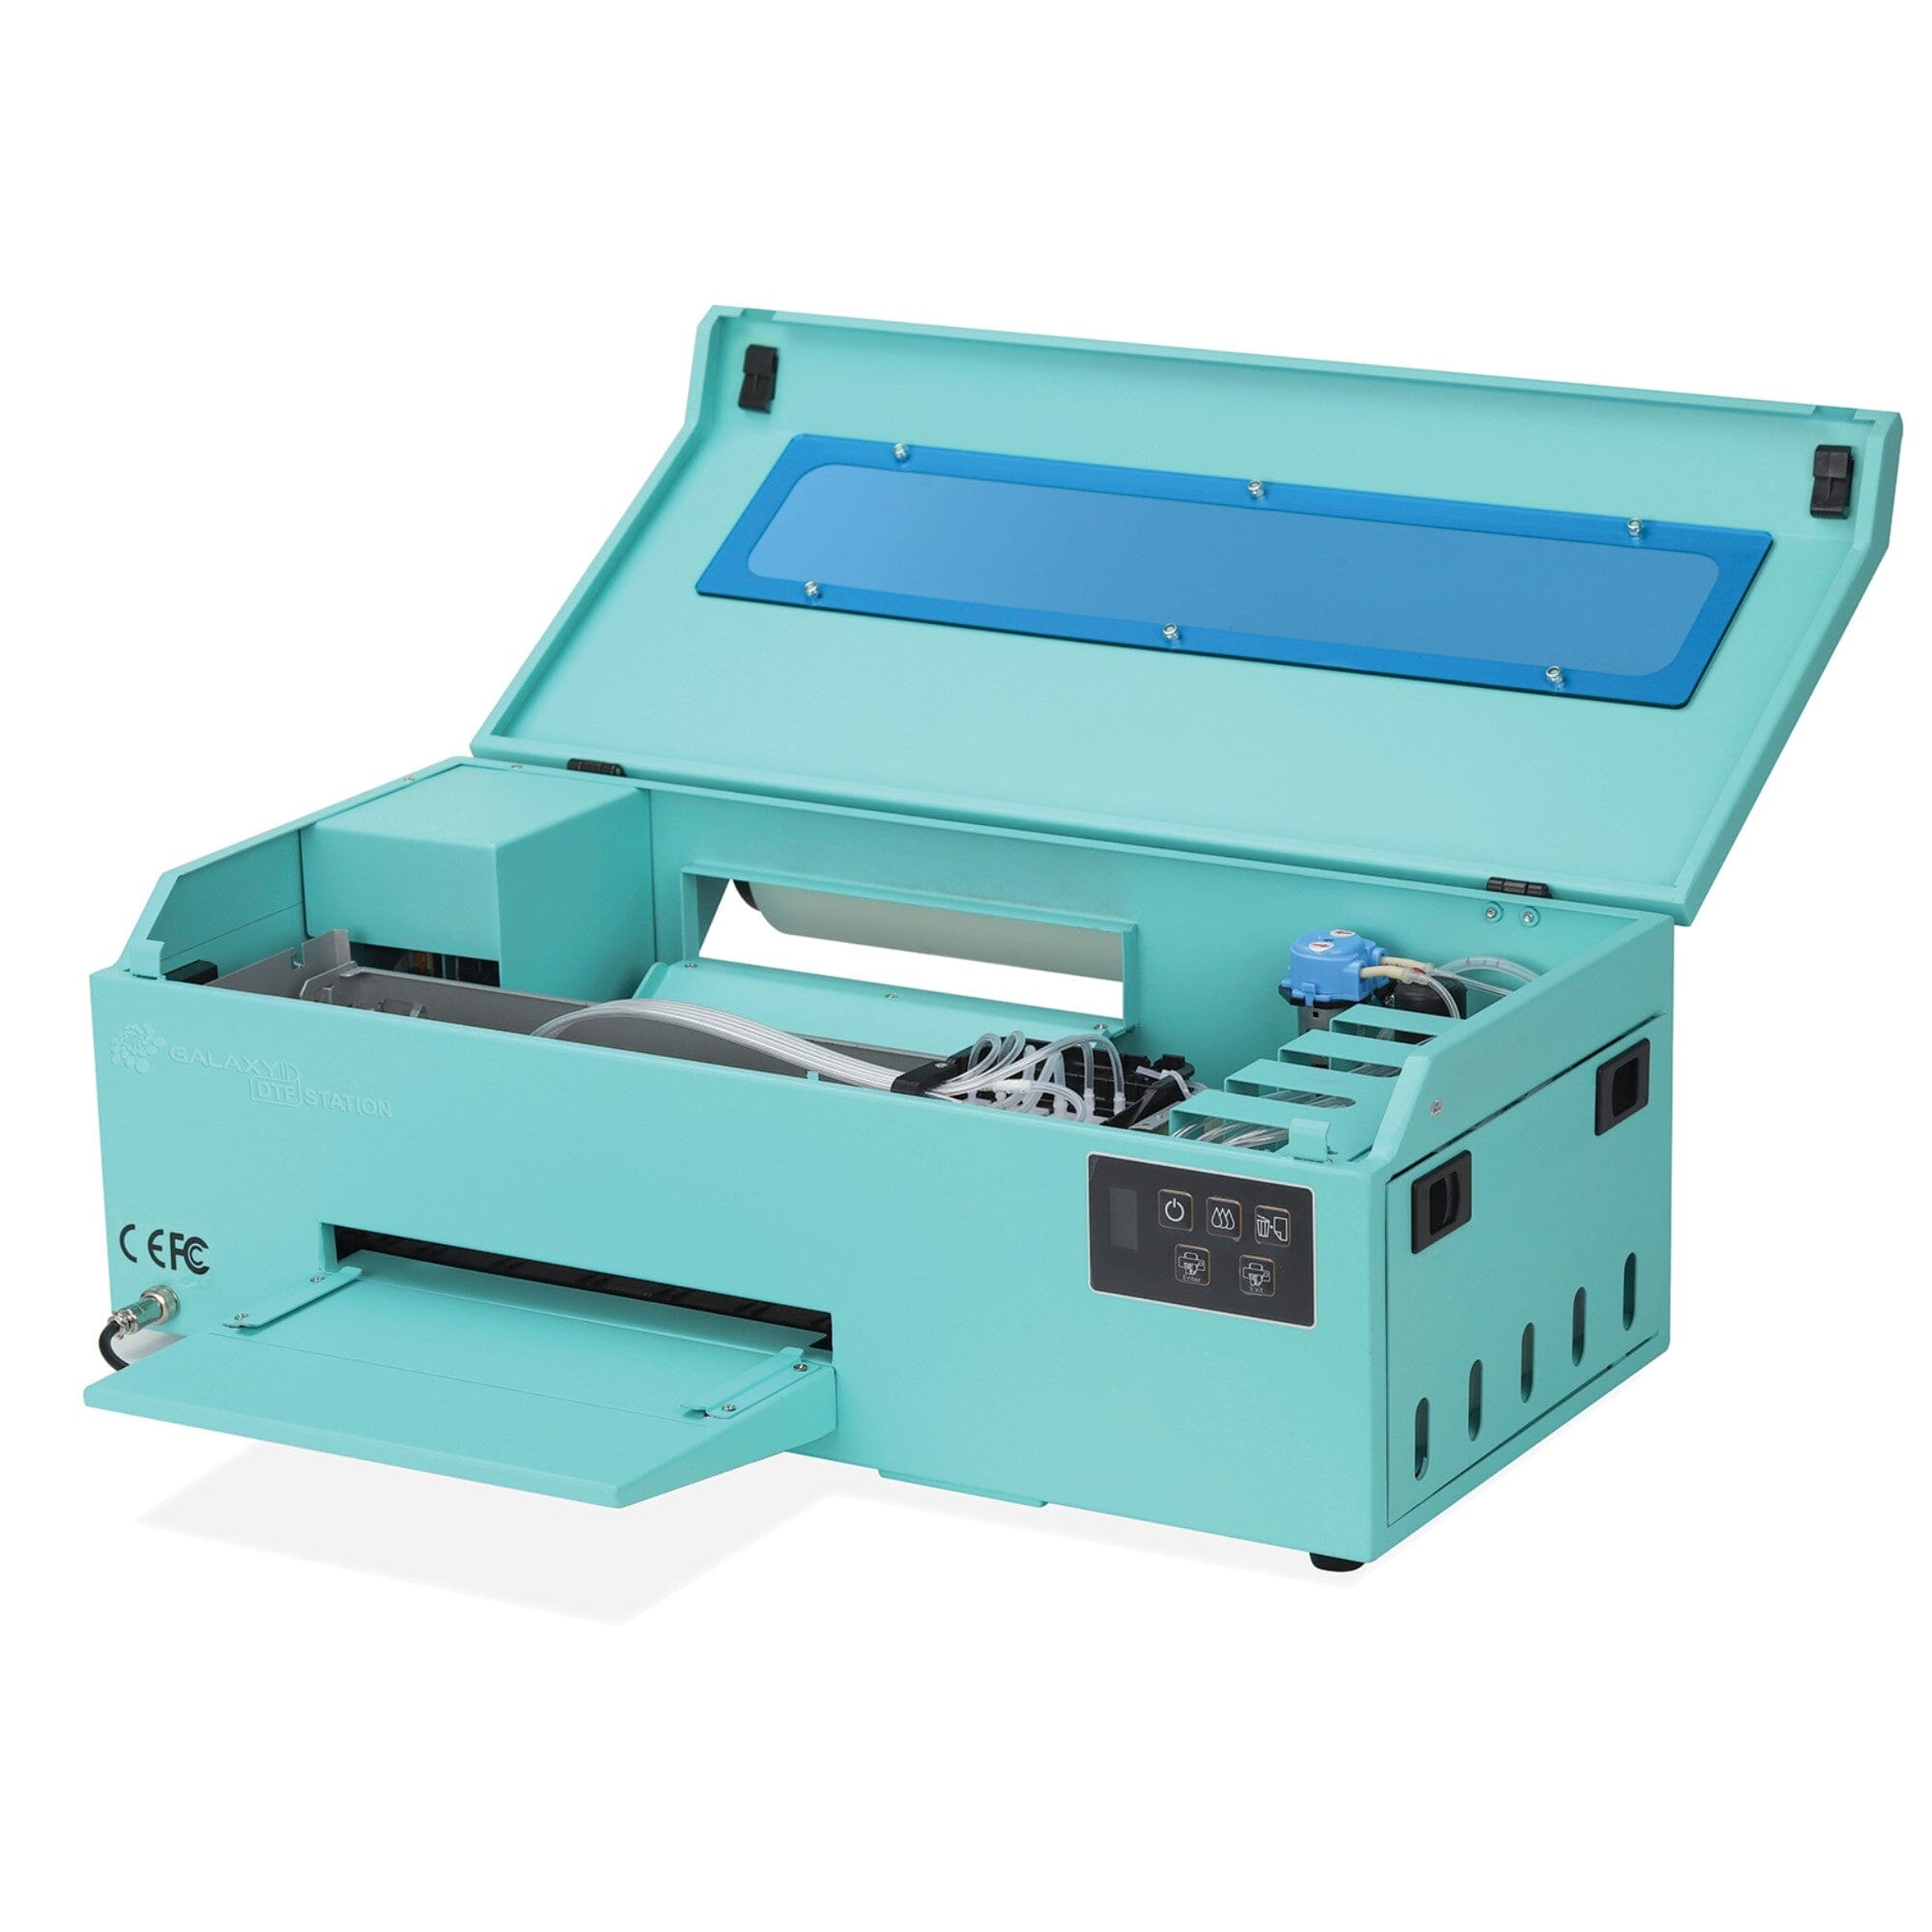 A4 DTG Printer T-shirt Printer Machine A4 DTF Printer With DTF Conversion  Kit For Jeans DTF Transfer Printer DTG Flatbed Printer